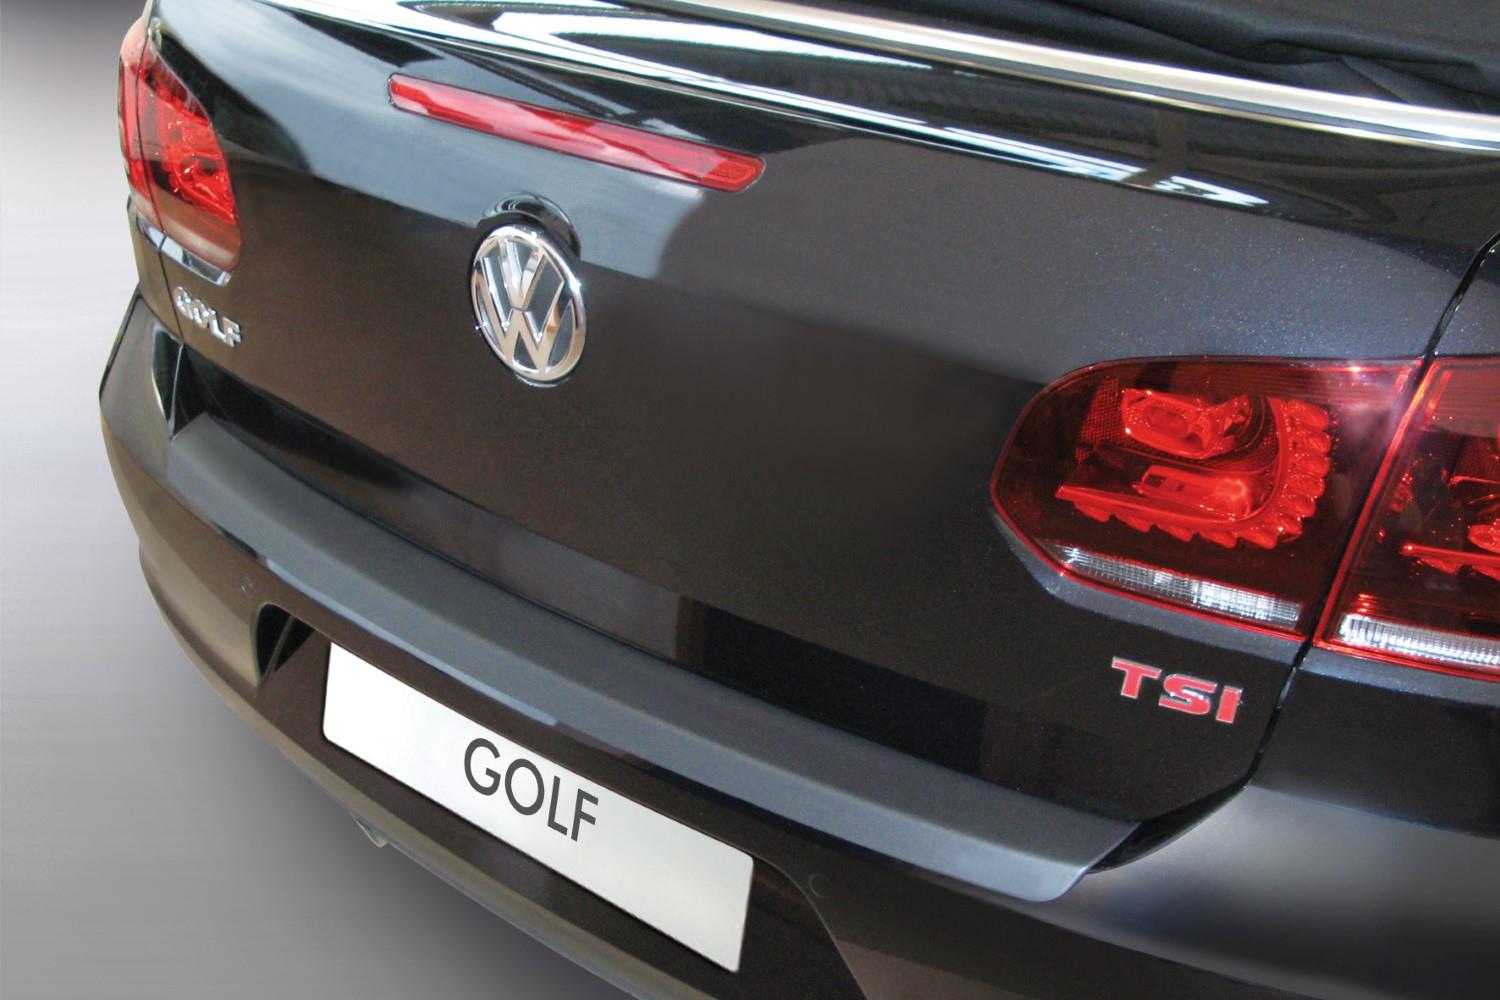 VW Golf 6 rear logo Black